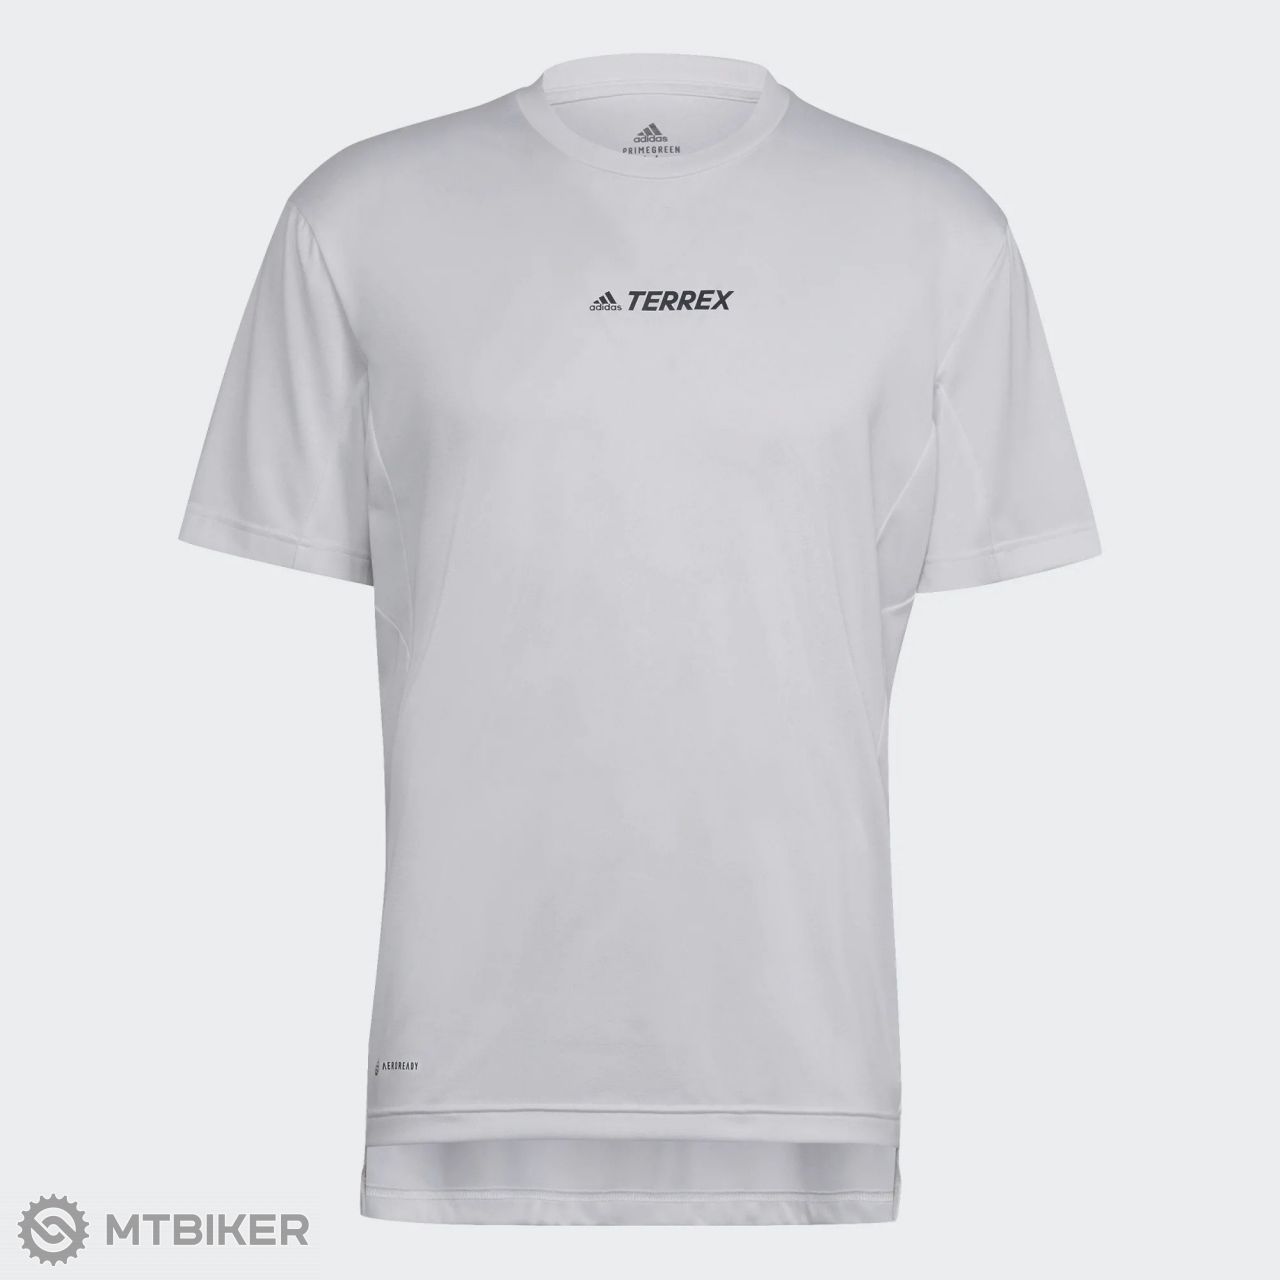 MULTI white T-shirt, TERREX adidas